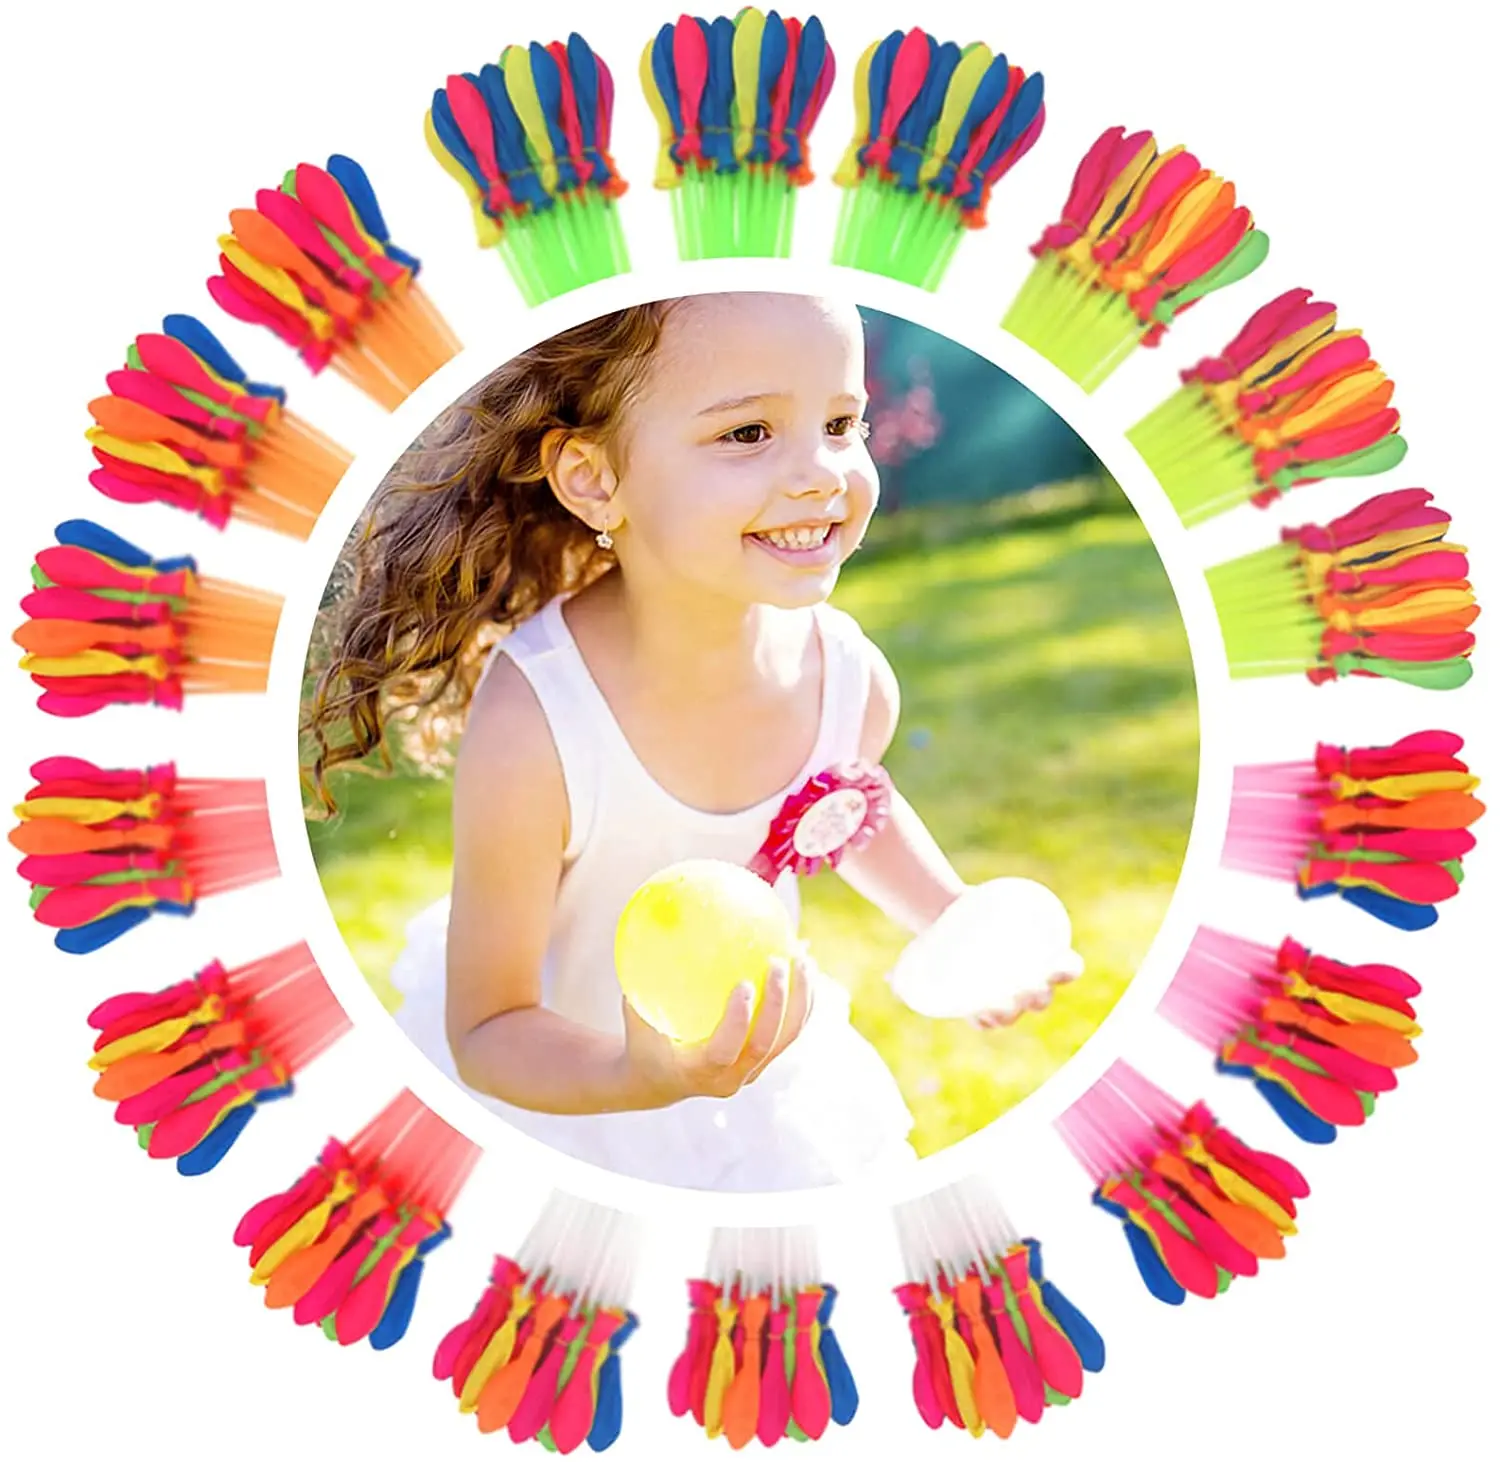 999 Quick Filling Water Balloons Self Sealing Mixed Colors Outdoor Summer Fun 